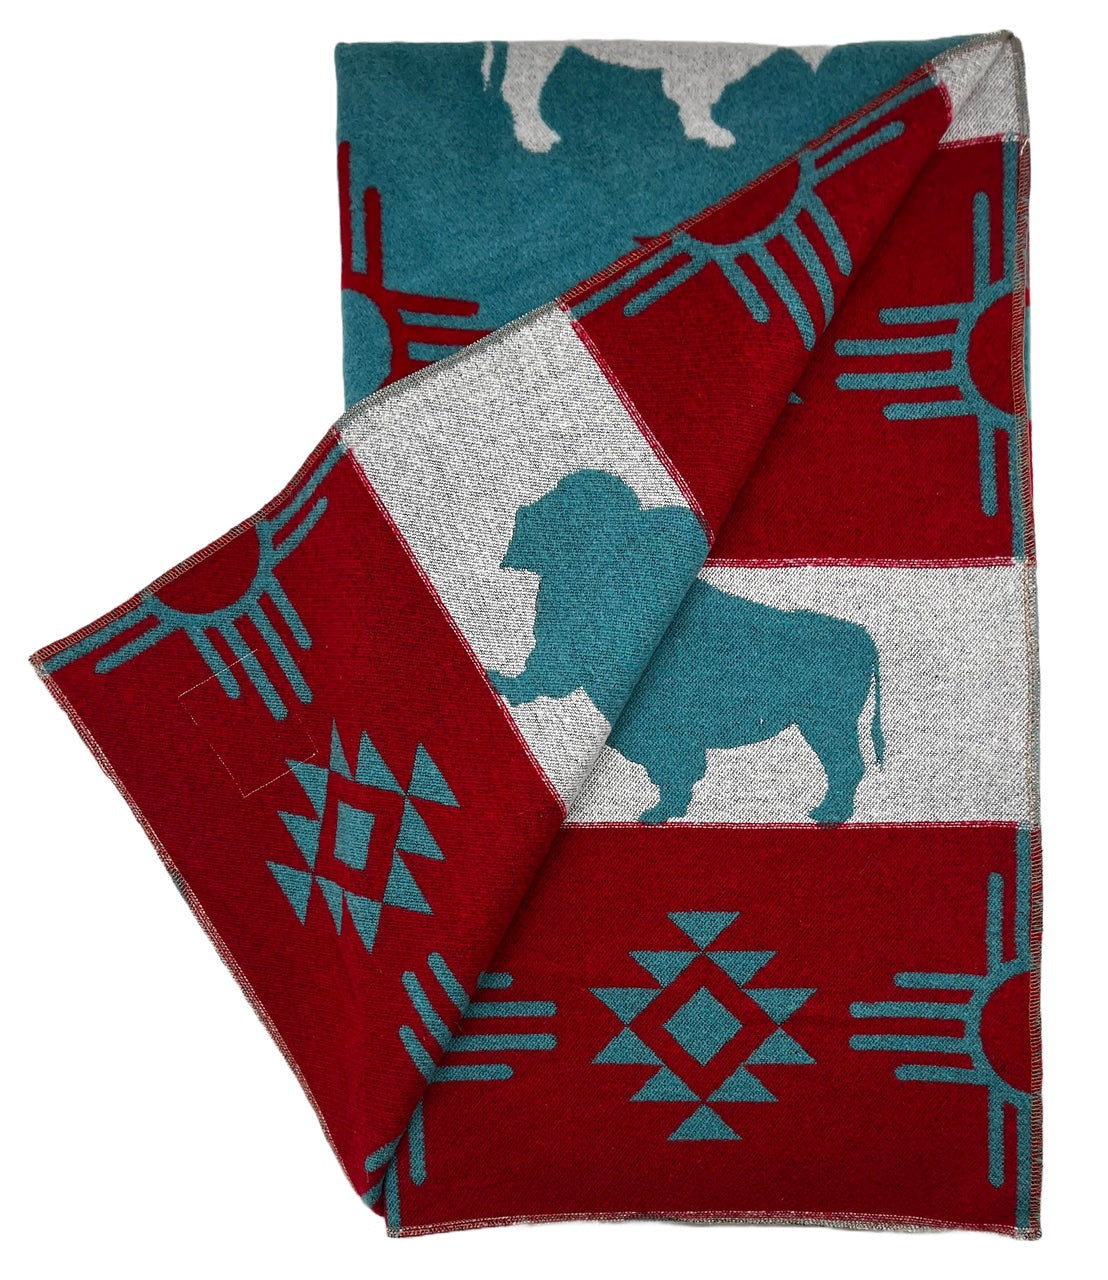 Buffalo Cross Premium Blanket – White Buffalo Turquoise Red